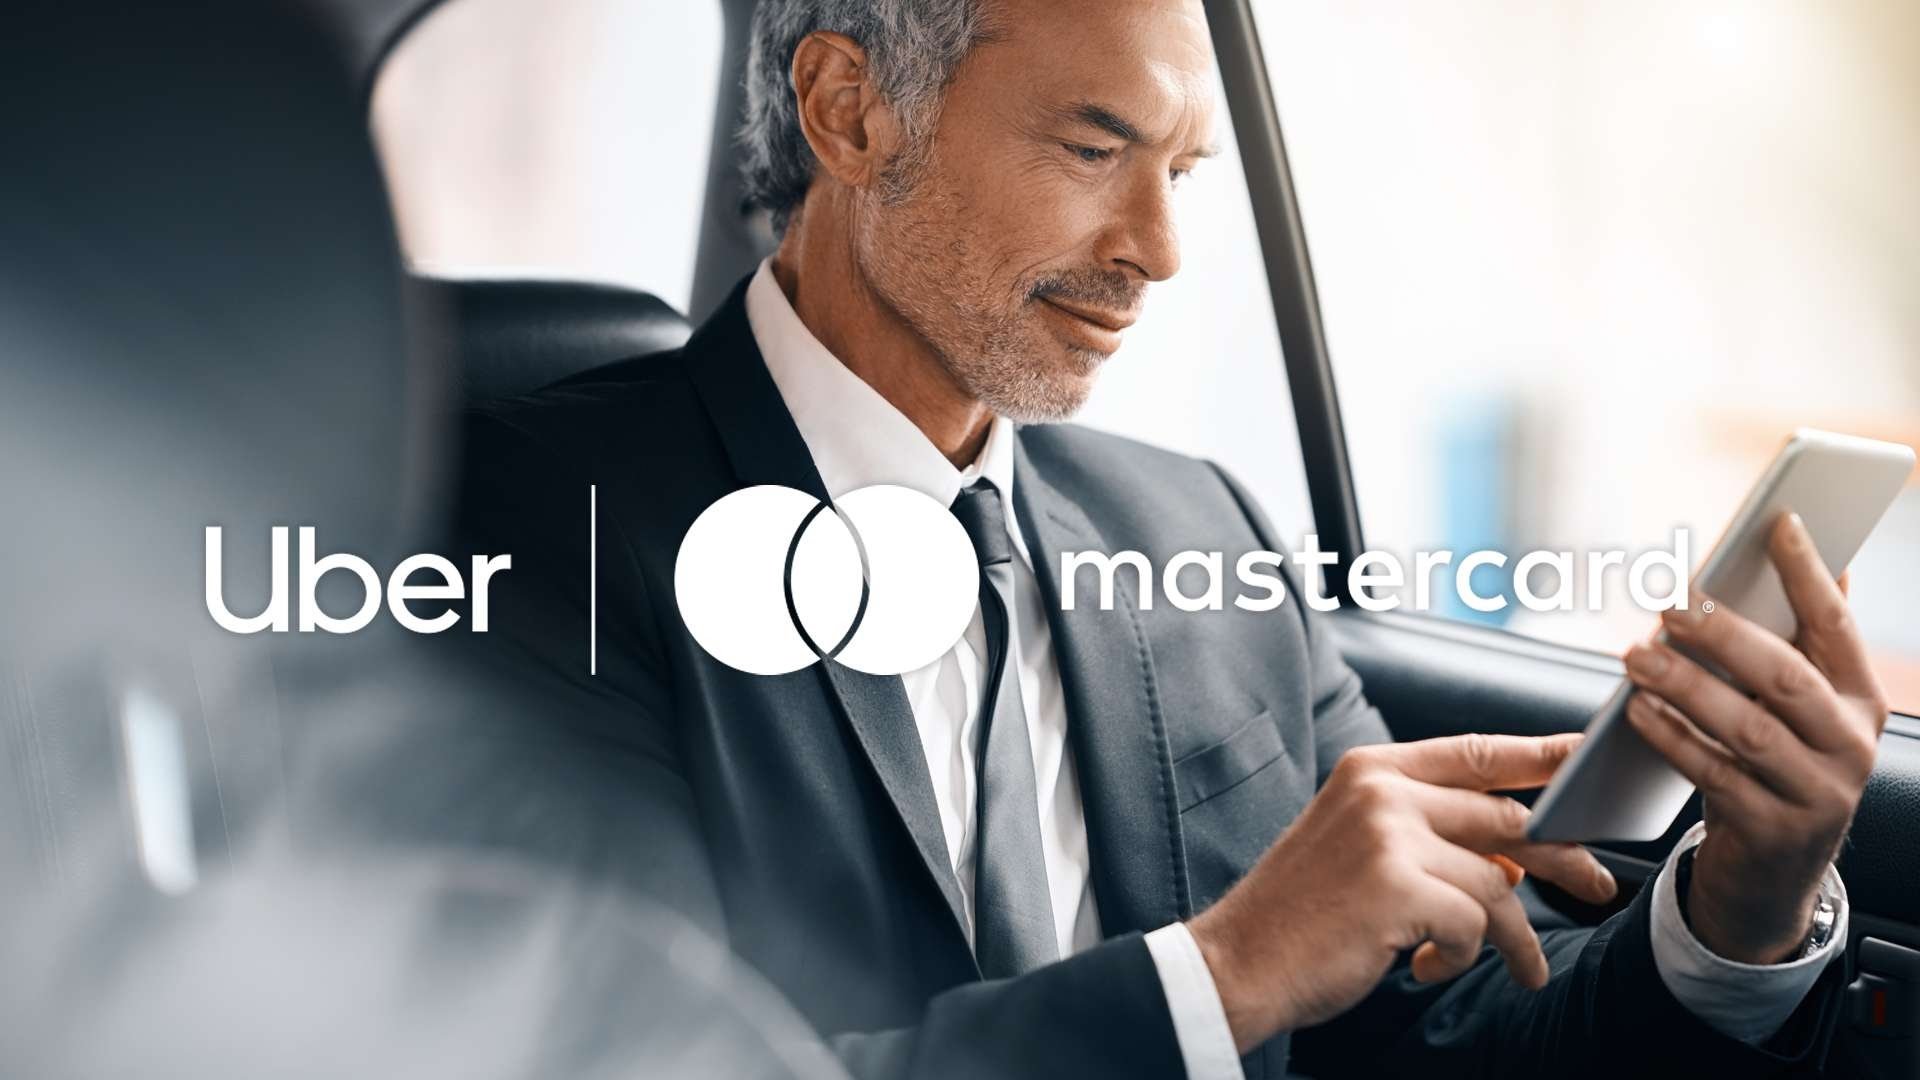 Uber mastercard